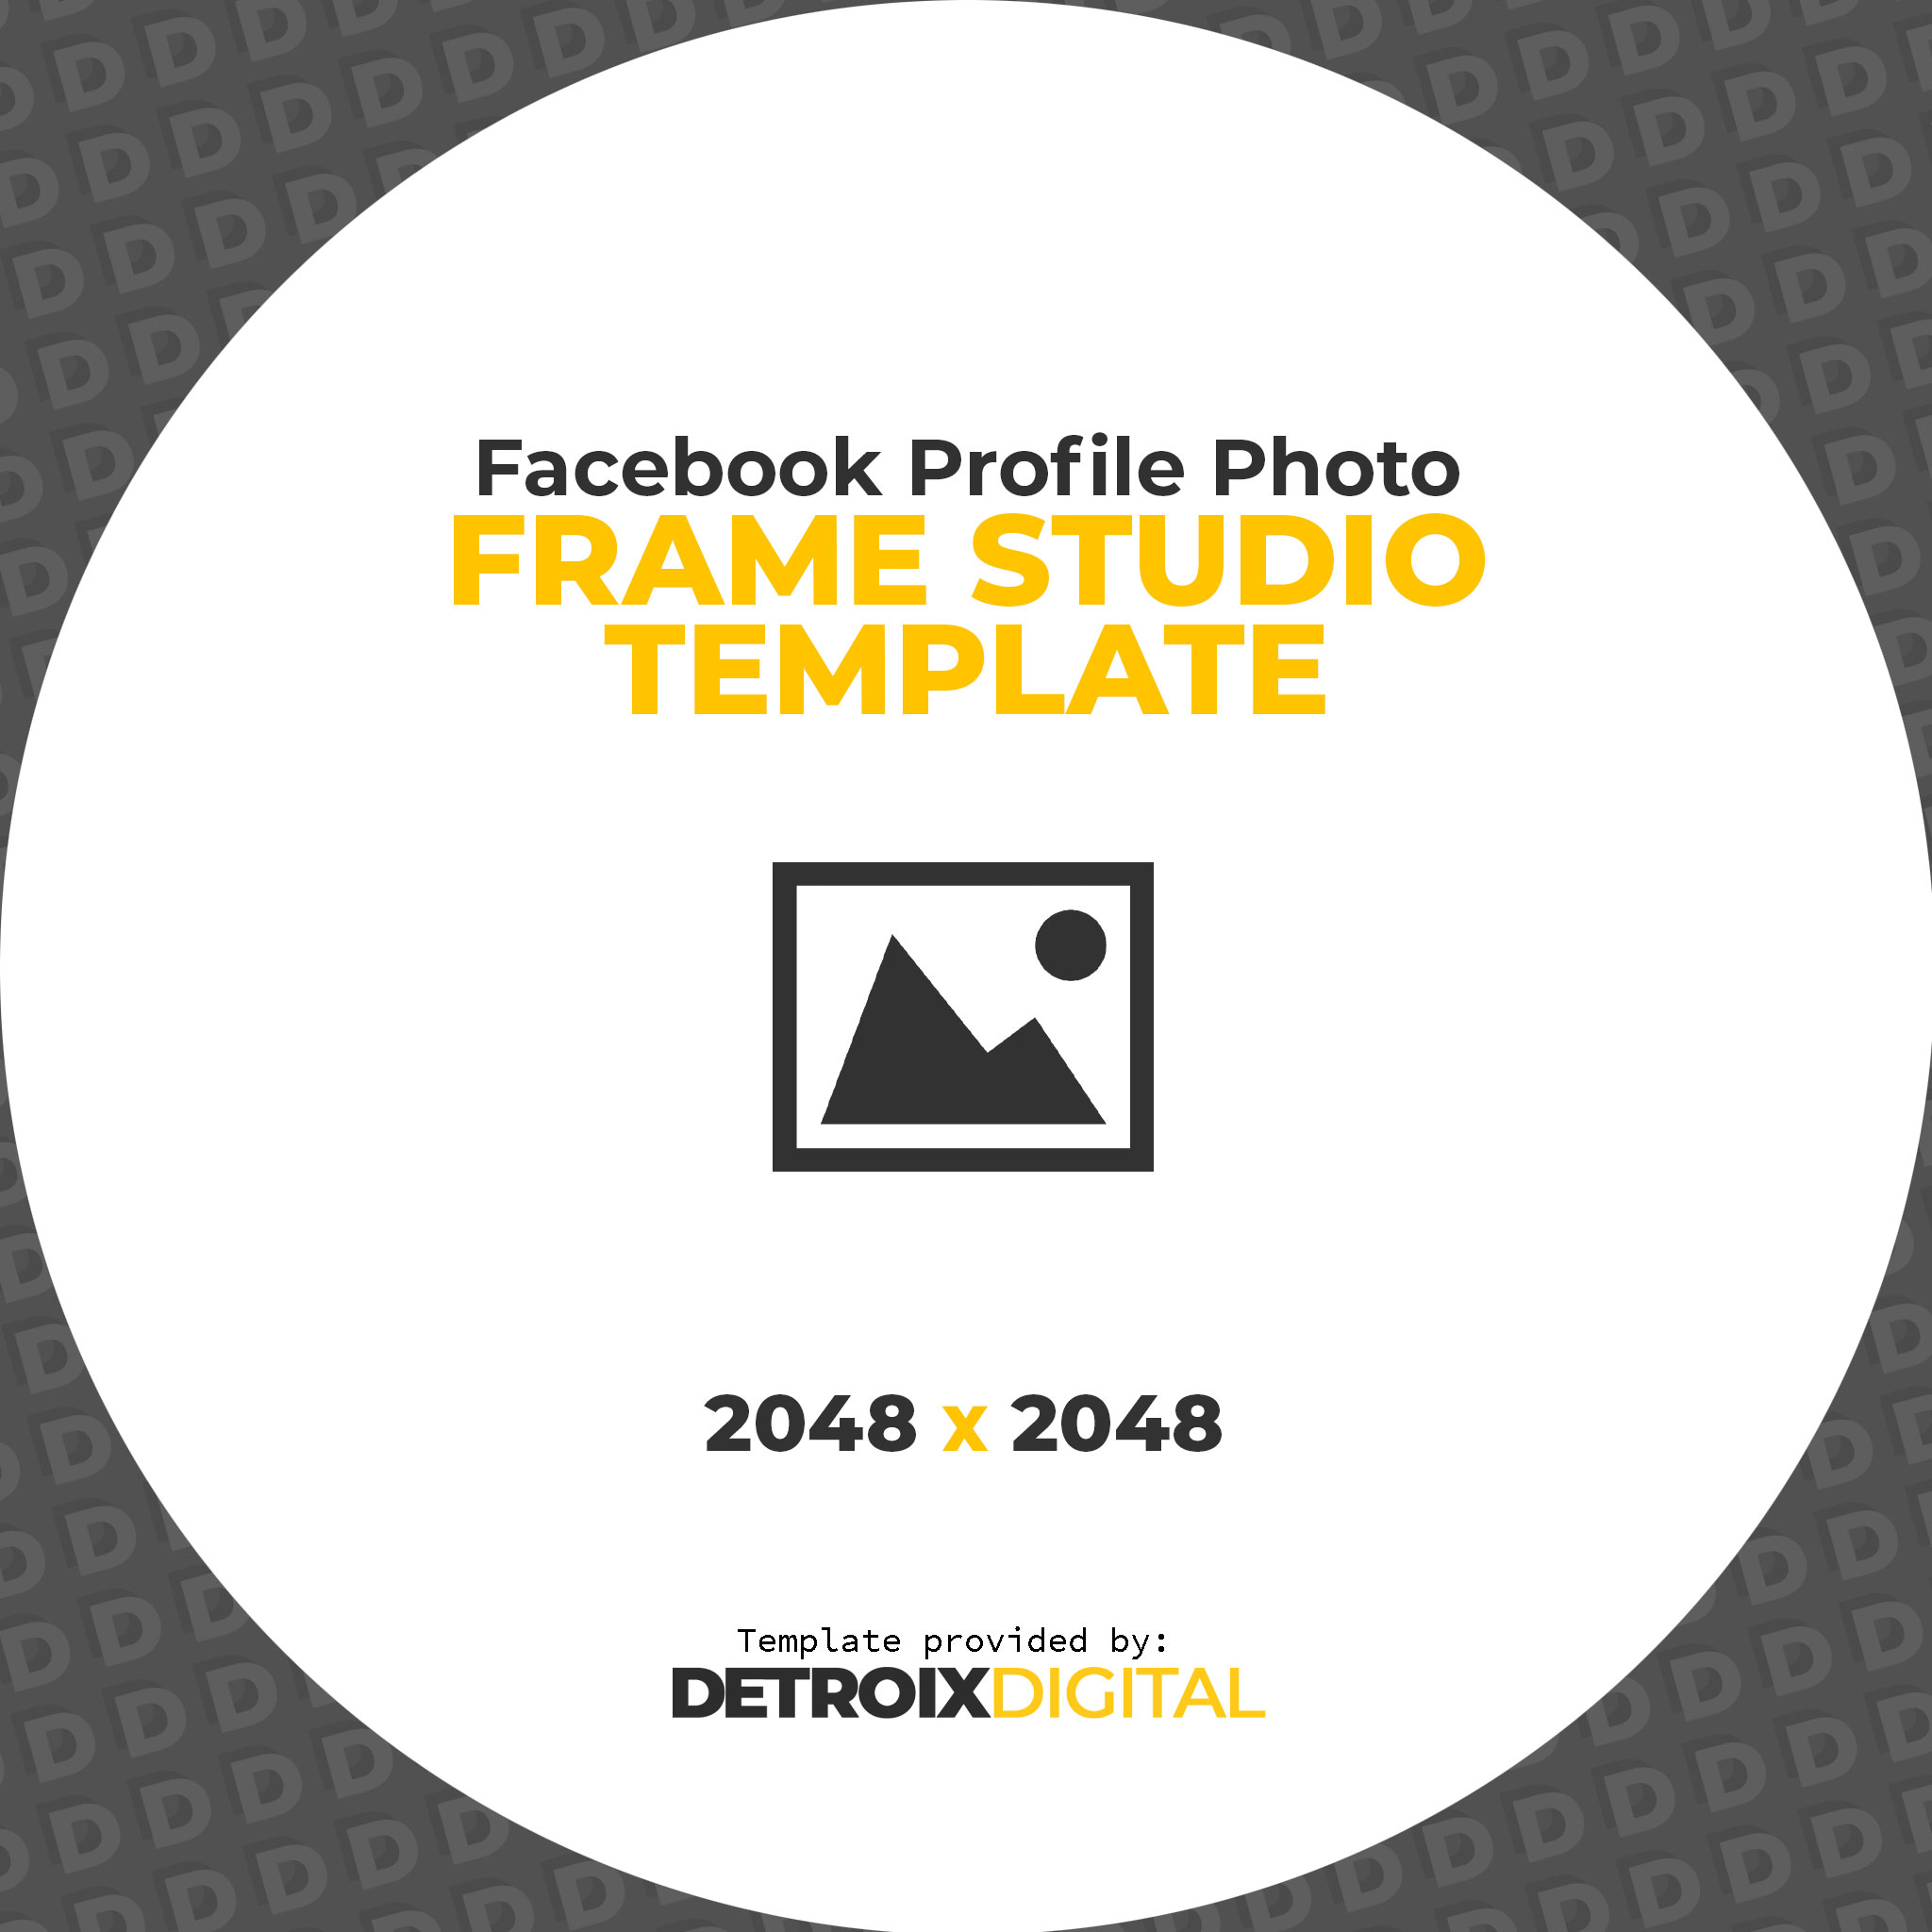 Facebook Frame Studio Template 2021 DETROIX DIGITAL